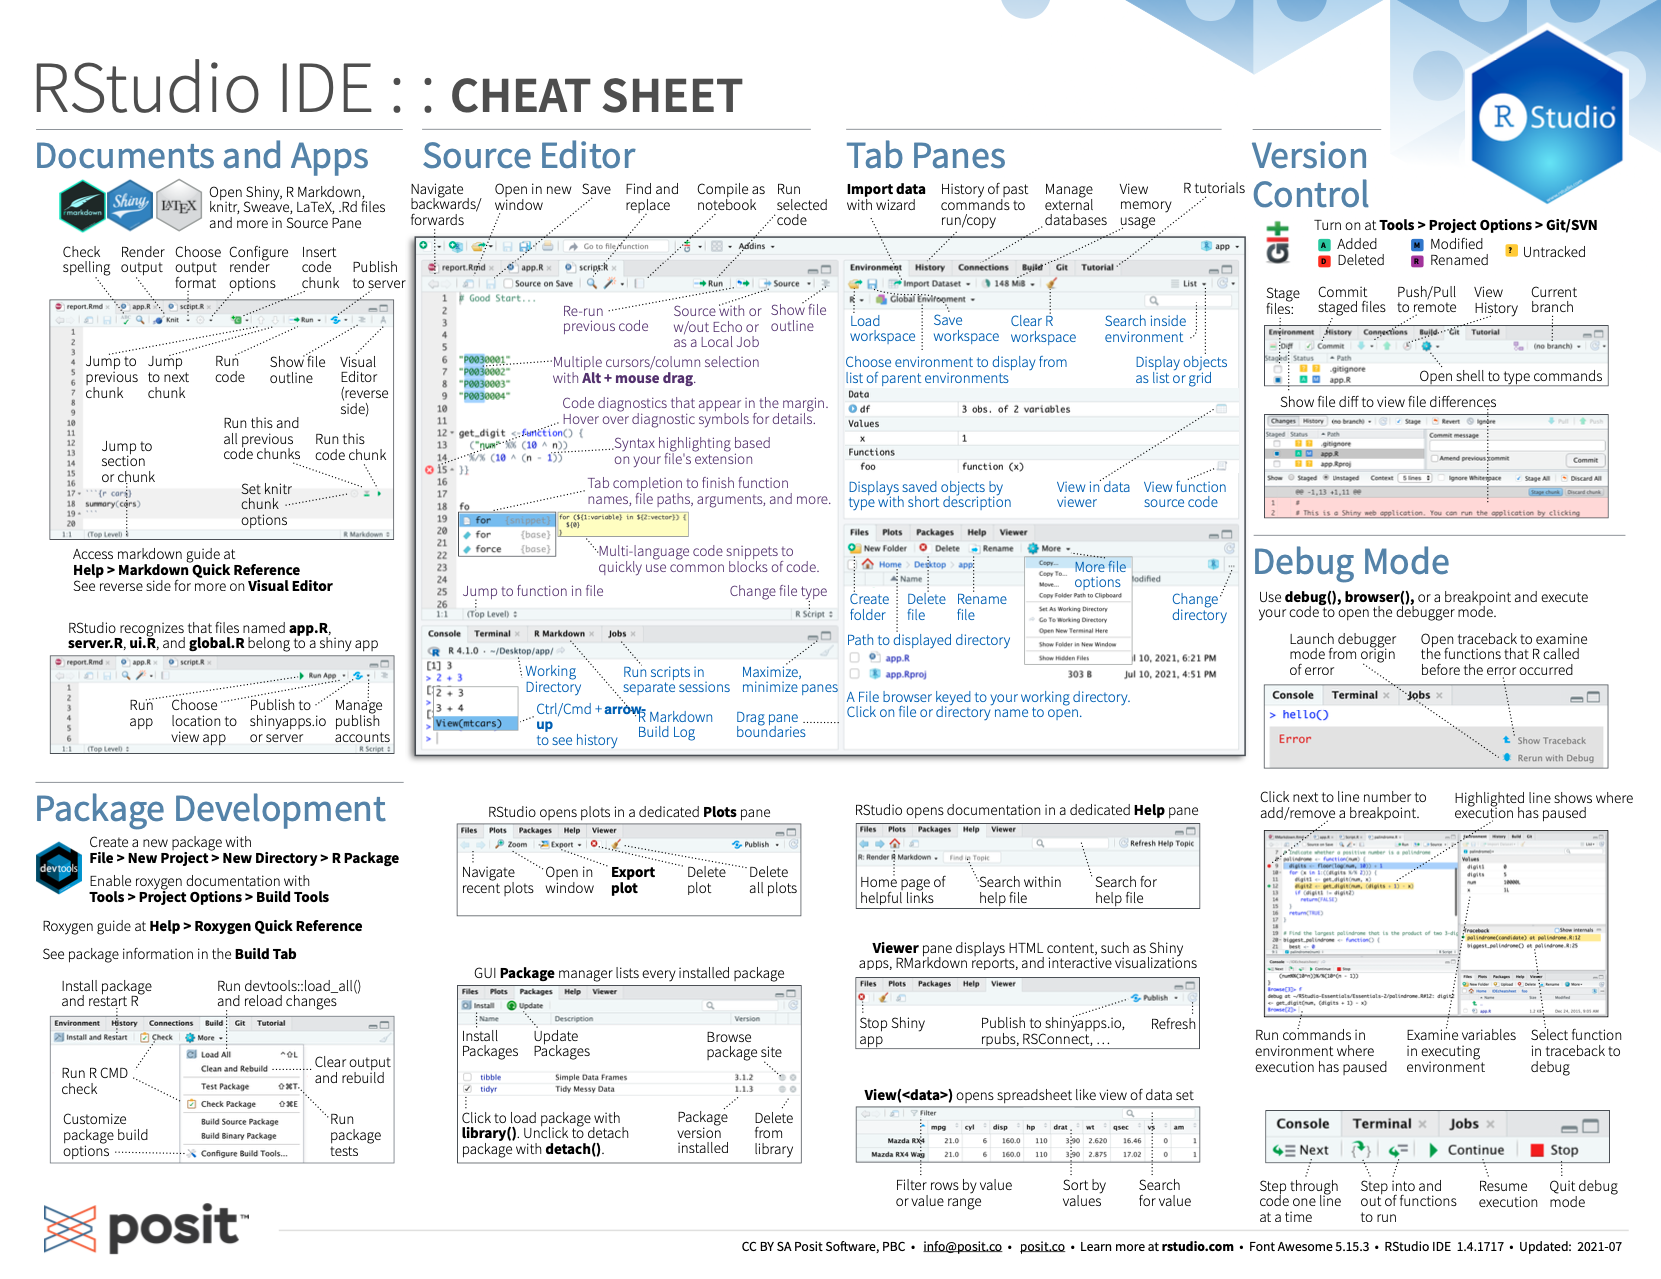 The RStudio IDE (from Posit cheatsheets).